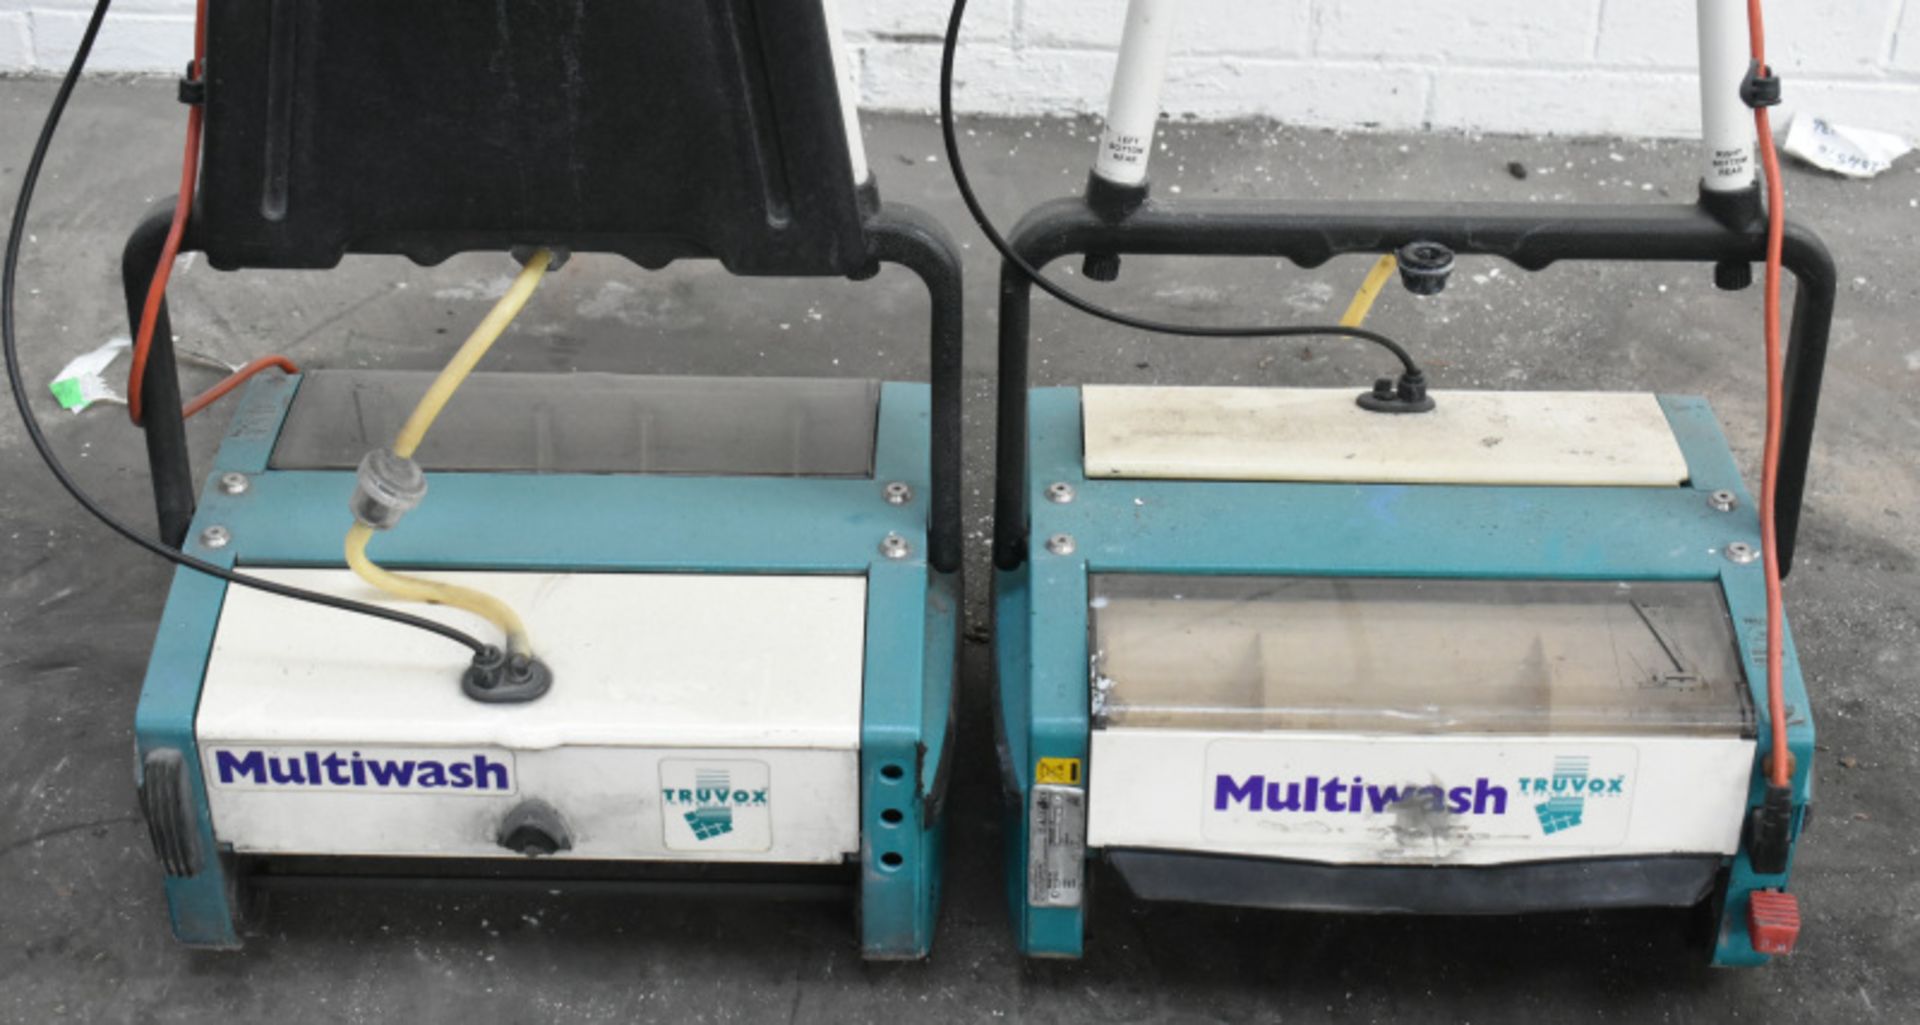 2 x Truvox Multiwash Floor Scrubber Dryer, Model- MW340/Pump - Image 2 of 6